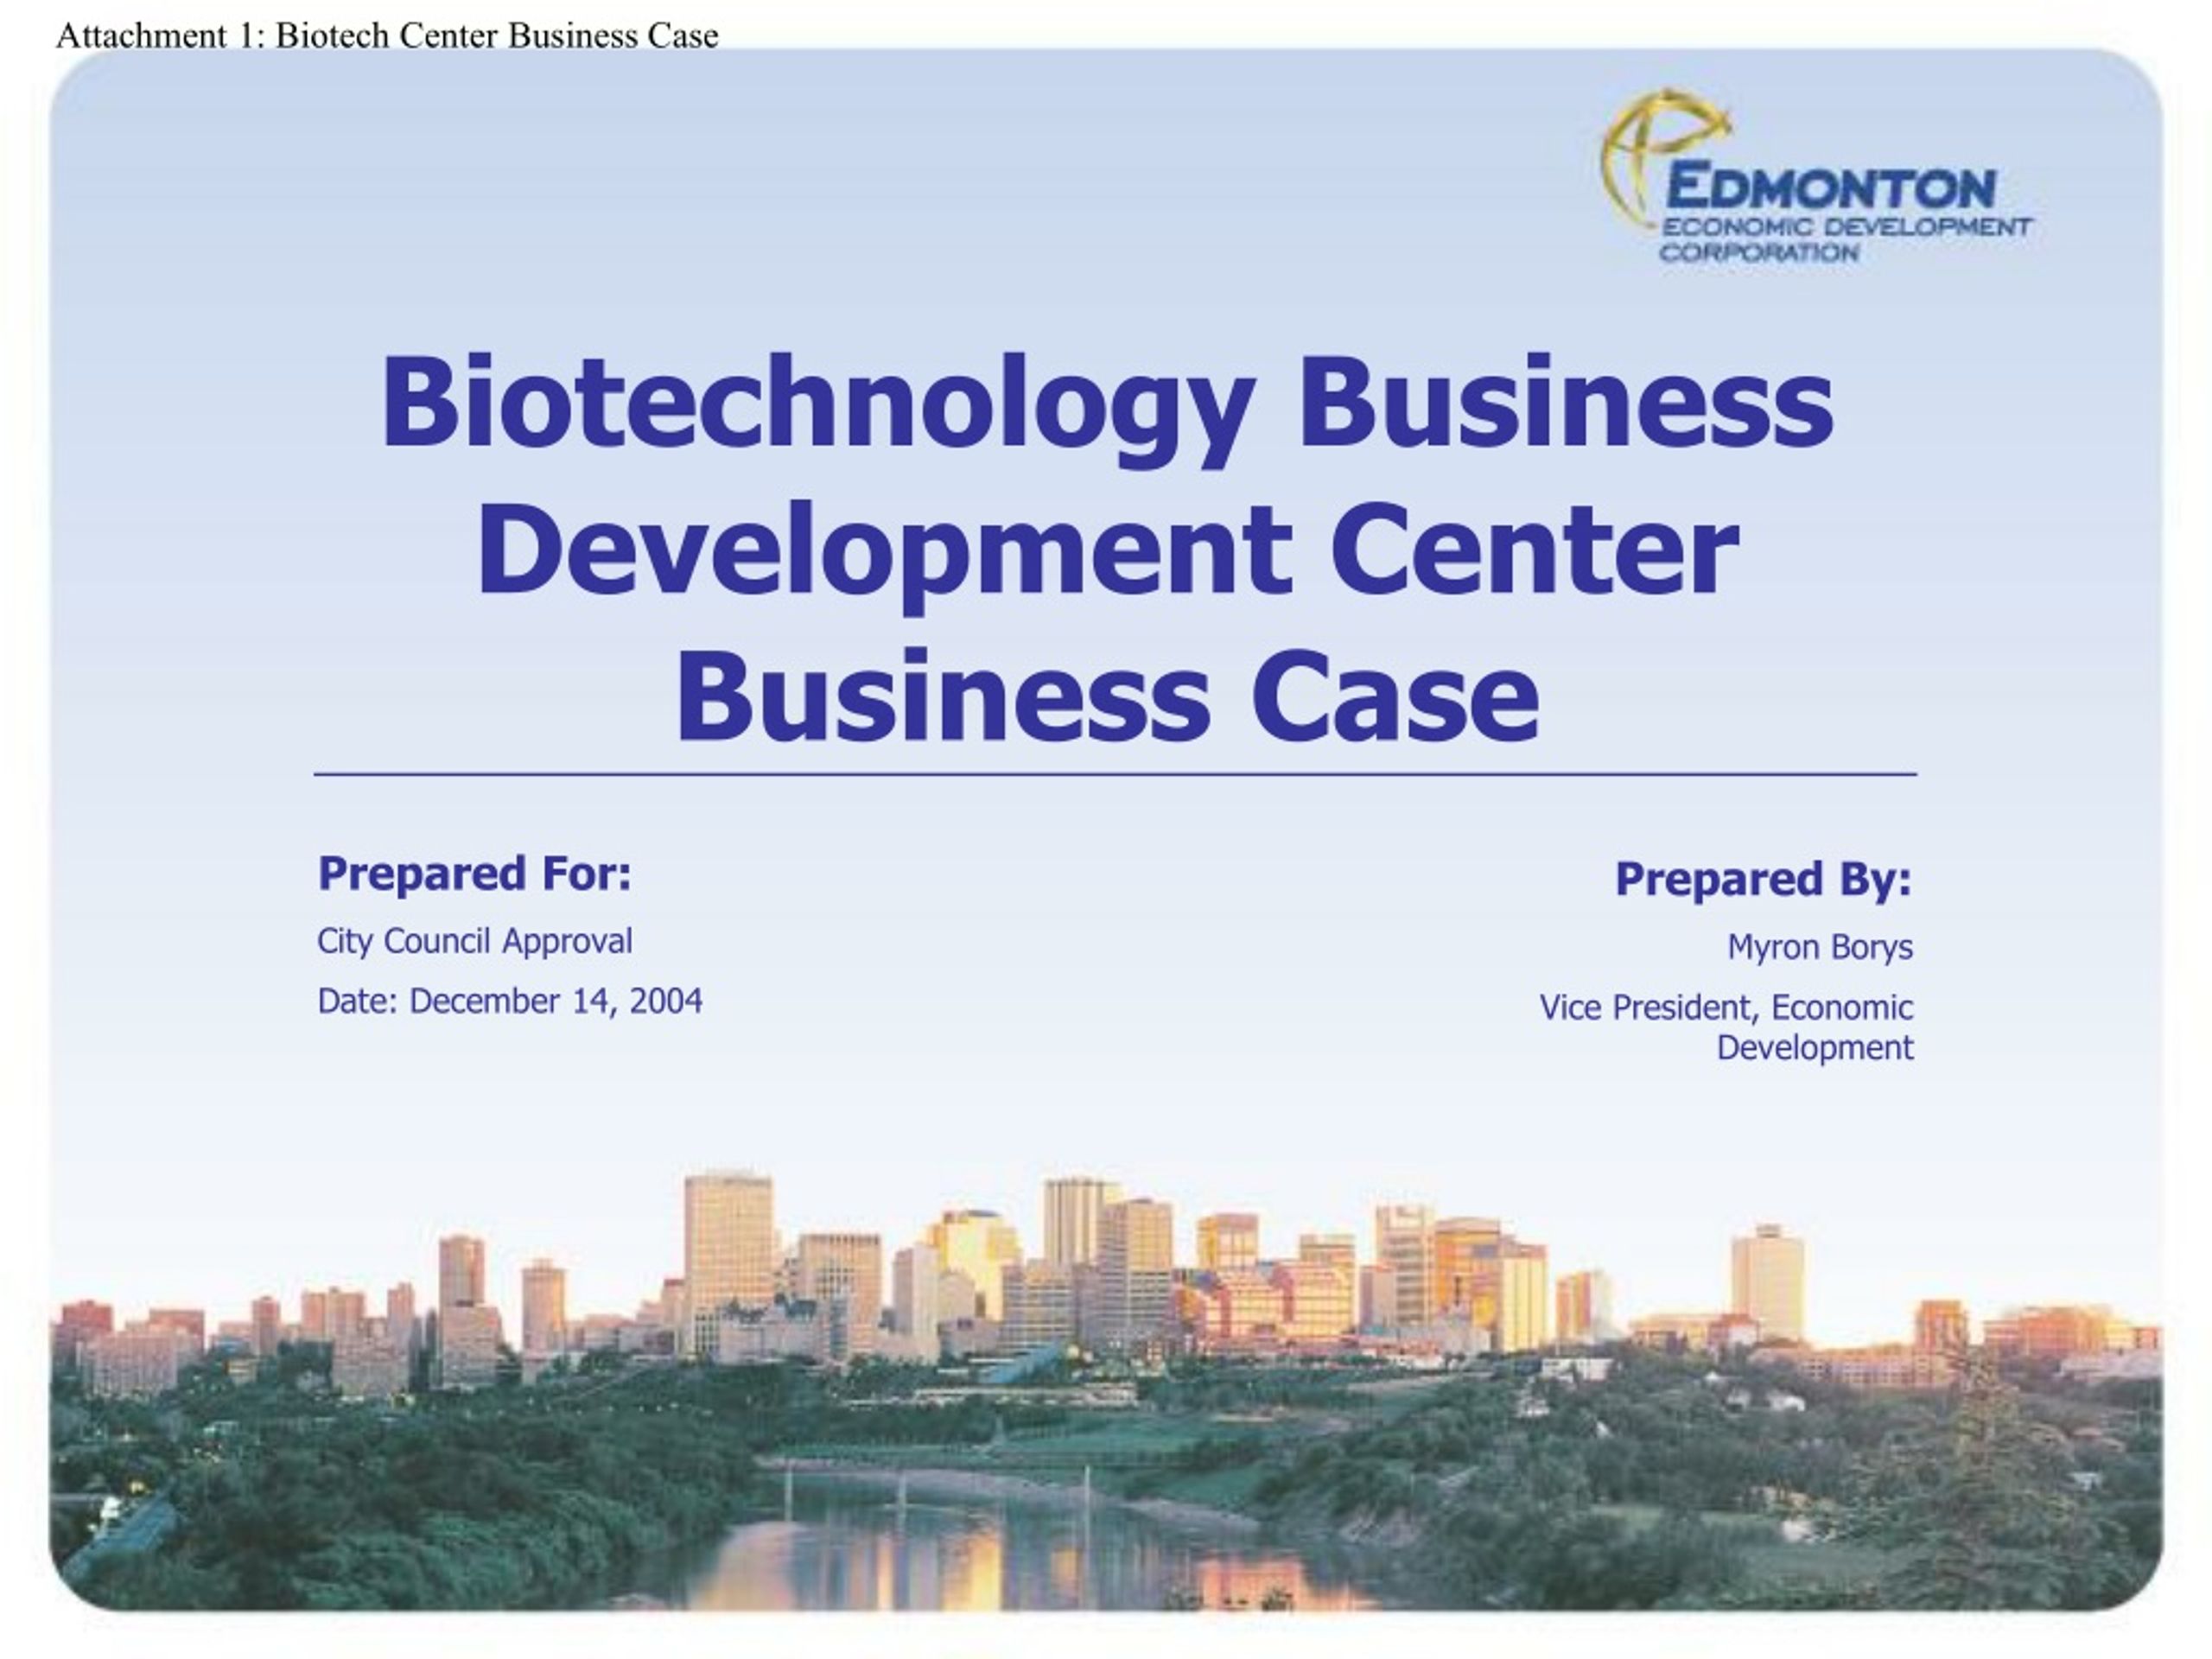 PPT Biotechnology Business Development Center Business Case